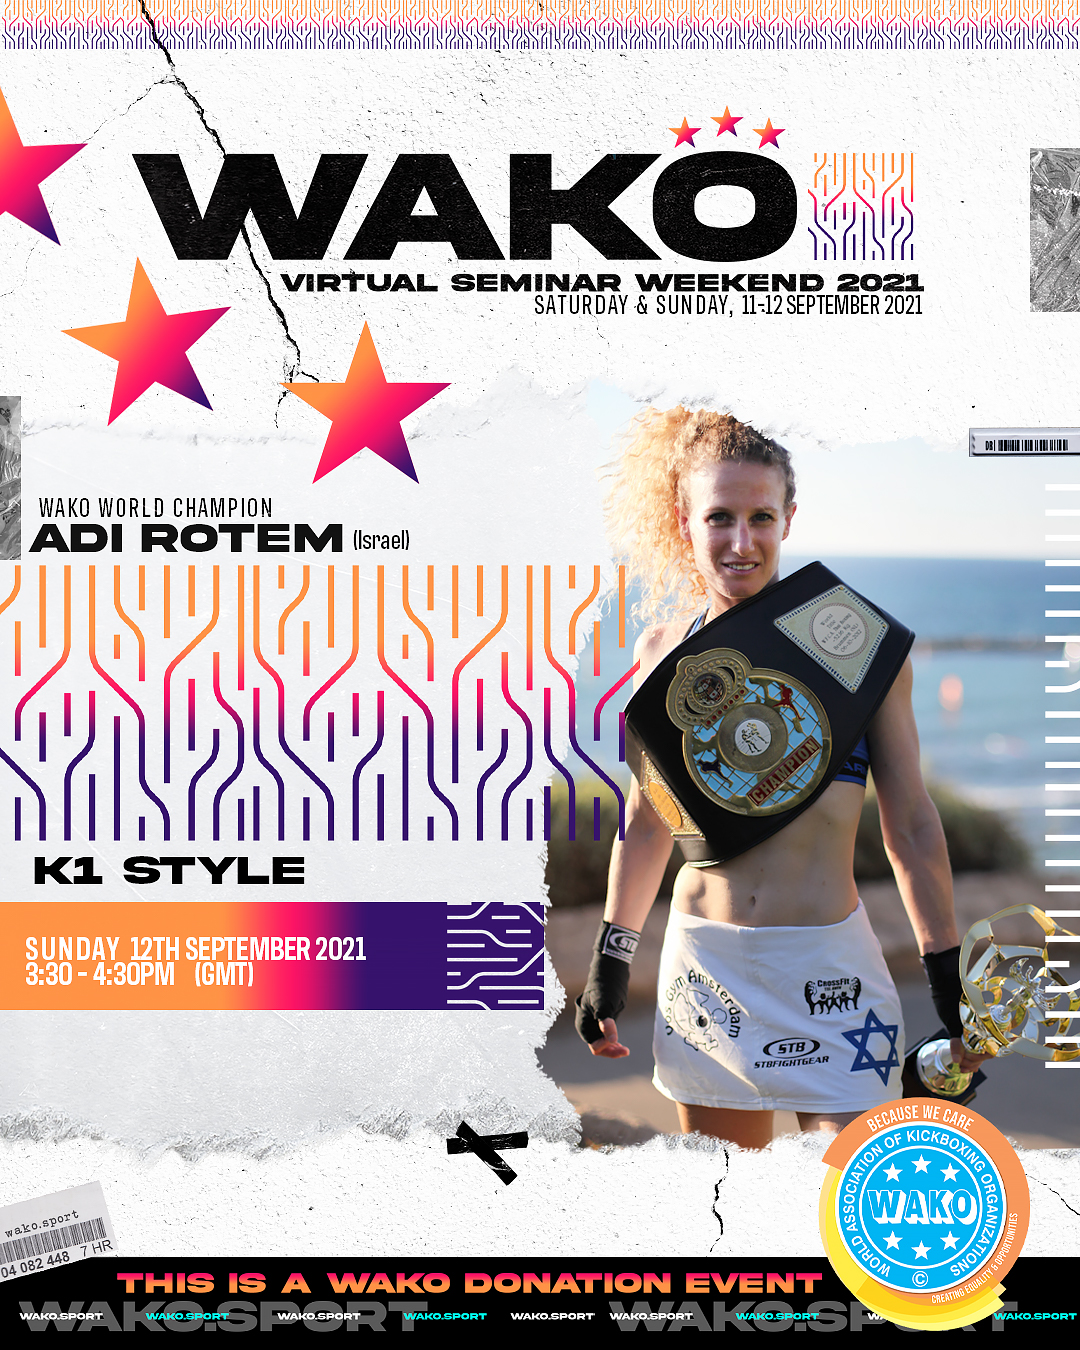 WAKO Virtual Seminar Weekend 2021 - 12 September 3:30-4:30 pm GMT -K1 Style-Adi Rotem (ISR)